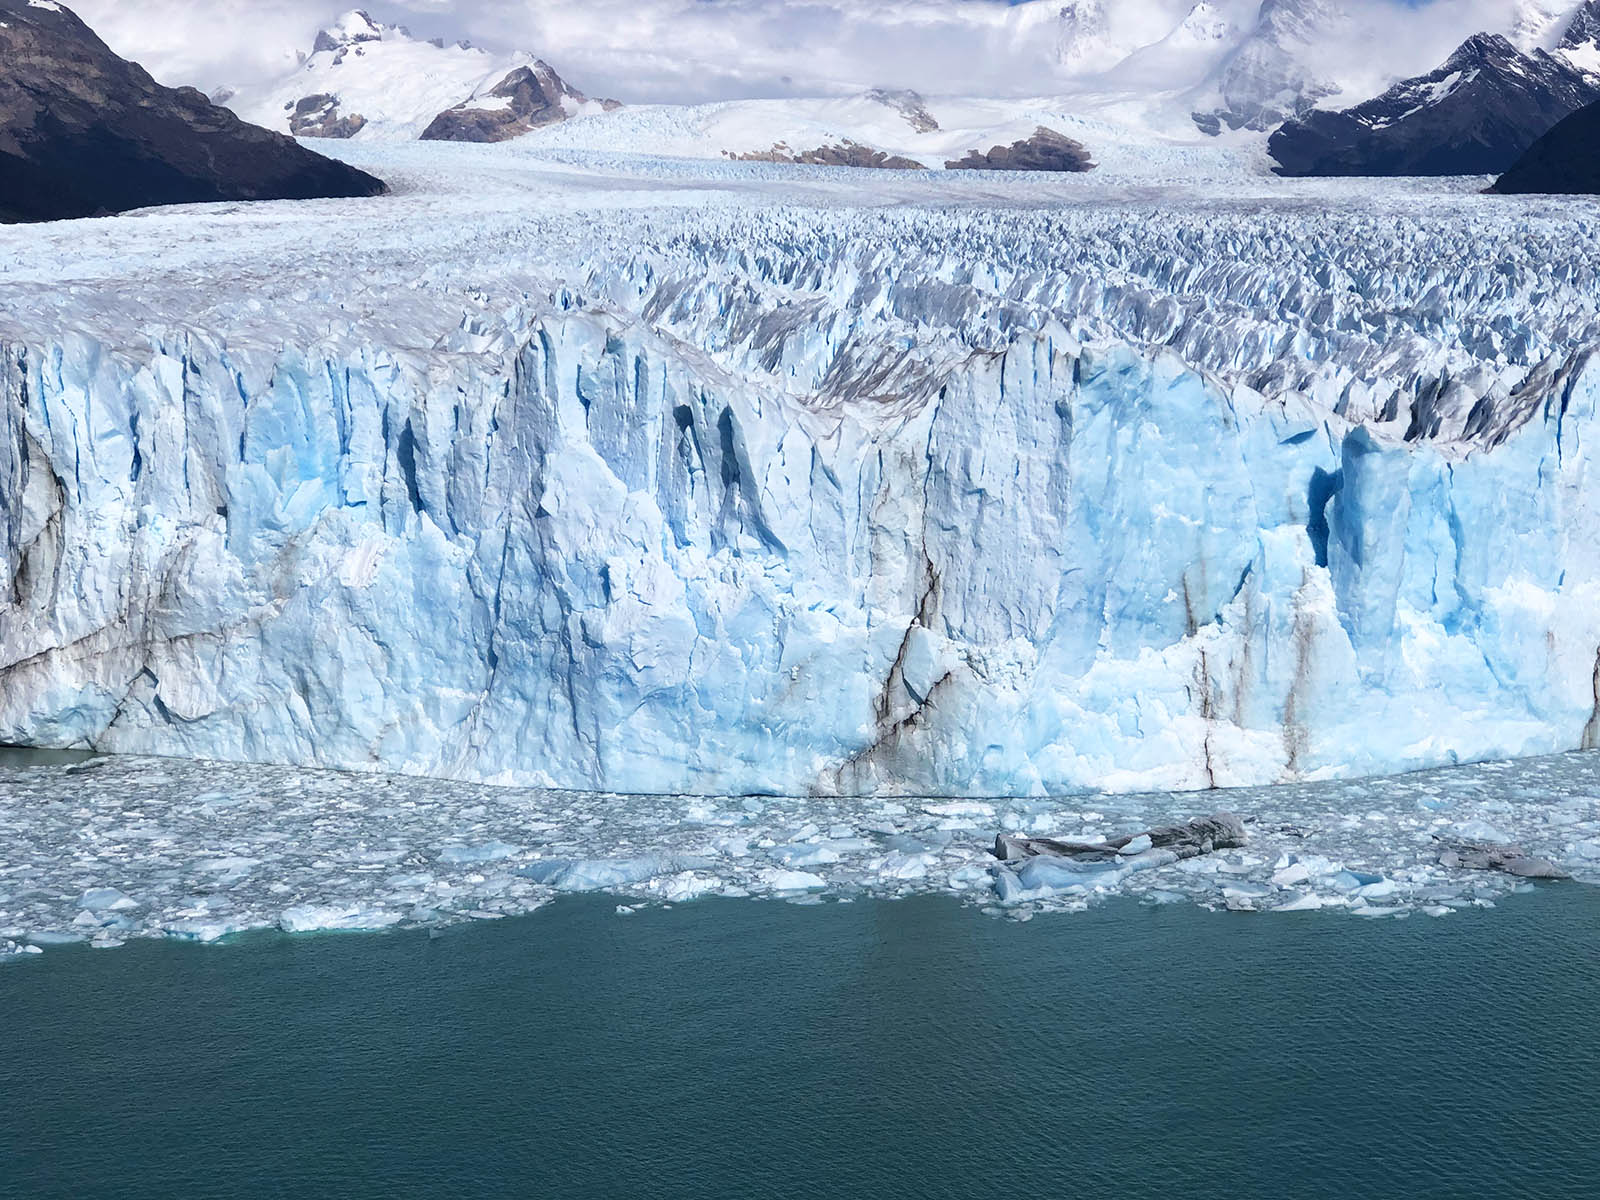 Perito Moreno glacier: Los Glaciares National Park’s awe-inspiring wonder. Credit: Carolina Valenzuela